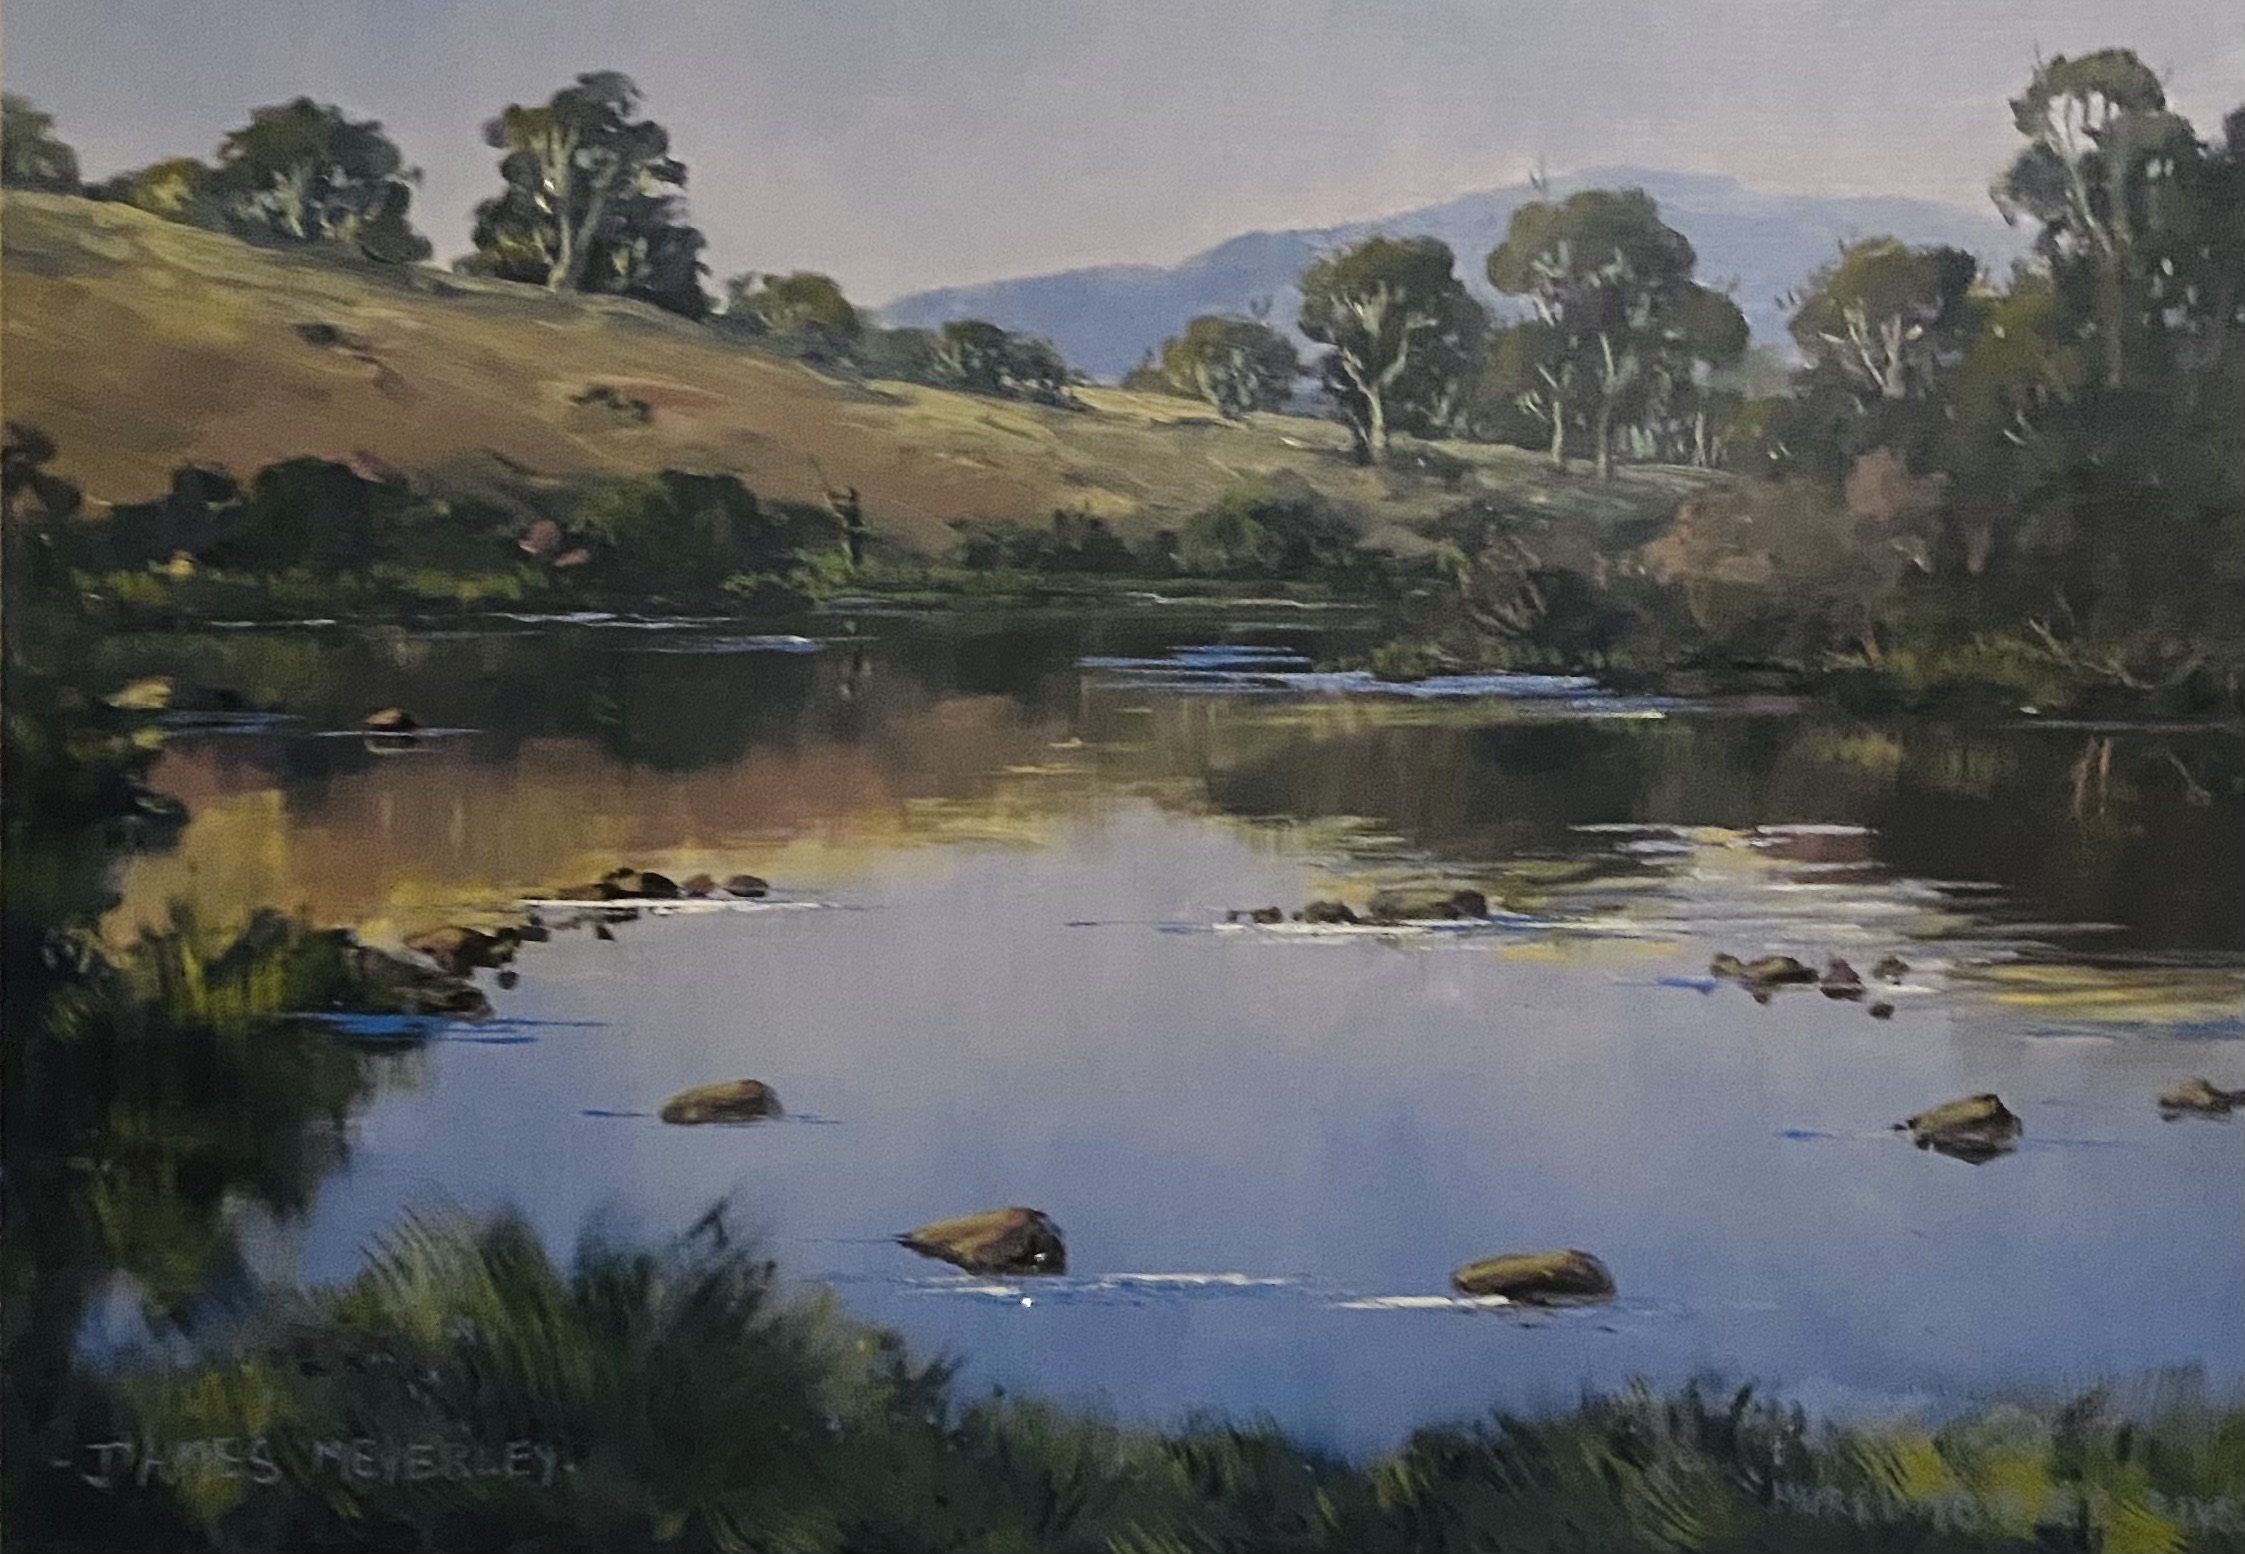 Painting of Fishing on the Murrumbidgee River